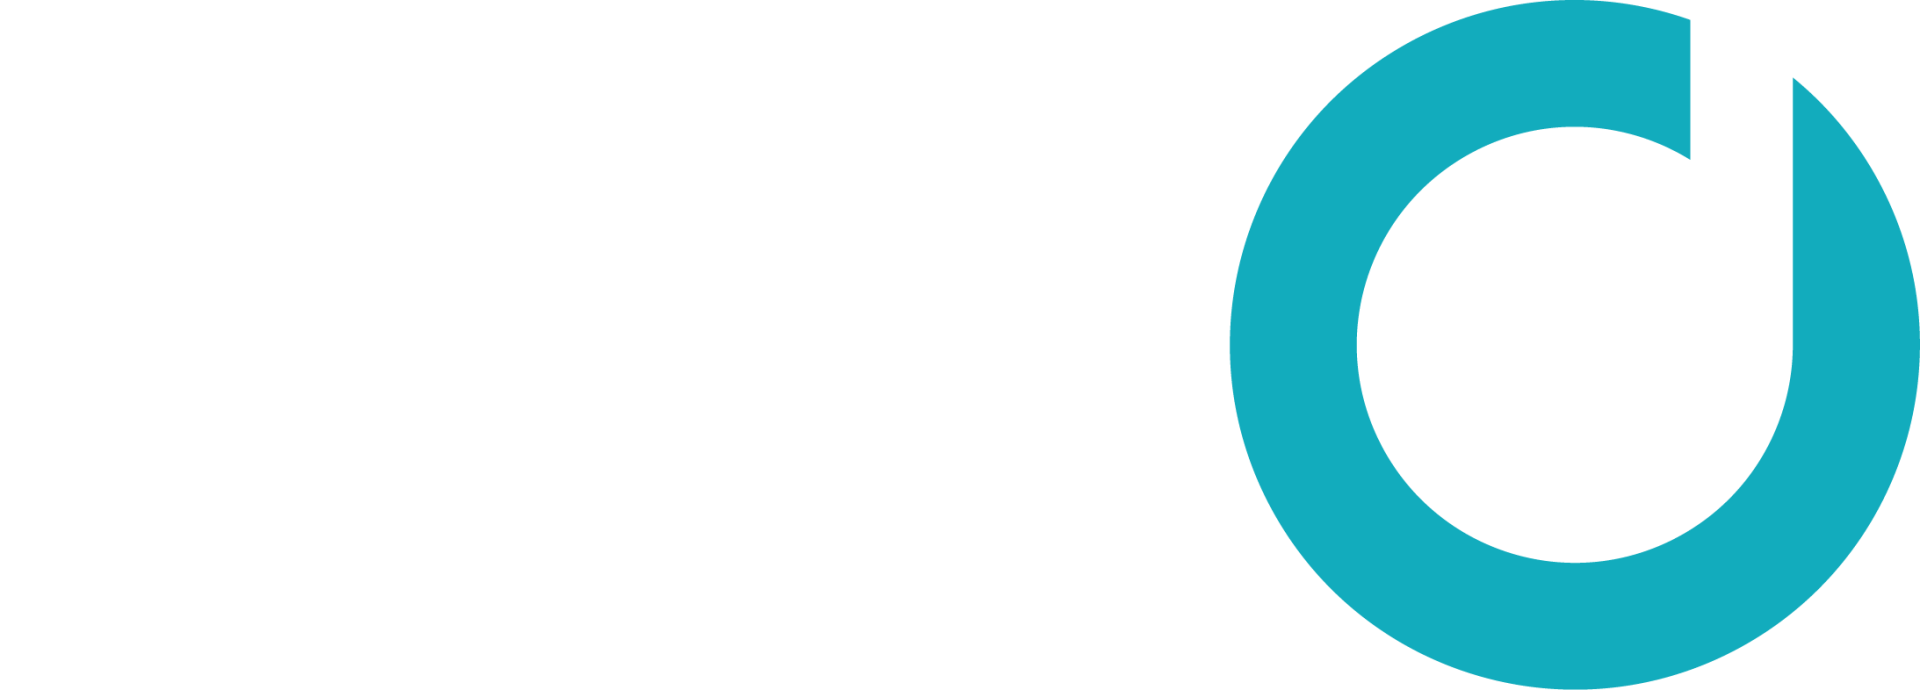 EPABI logo